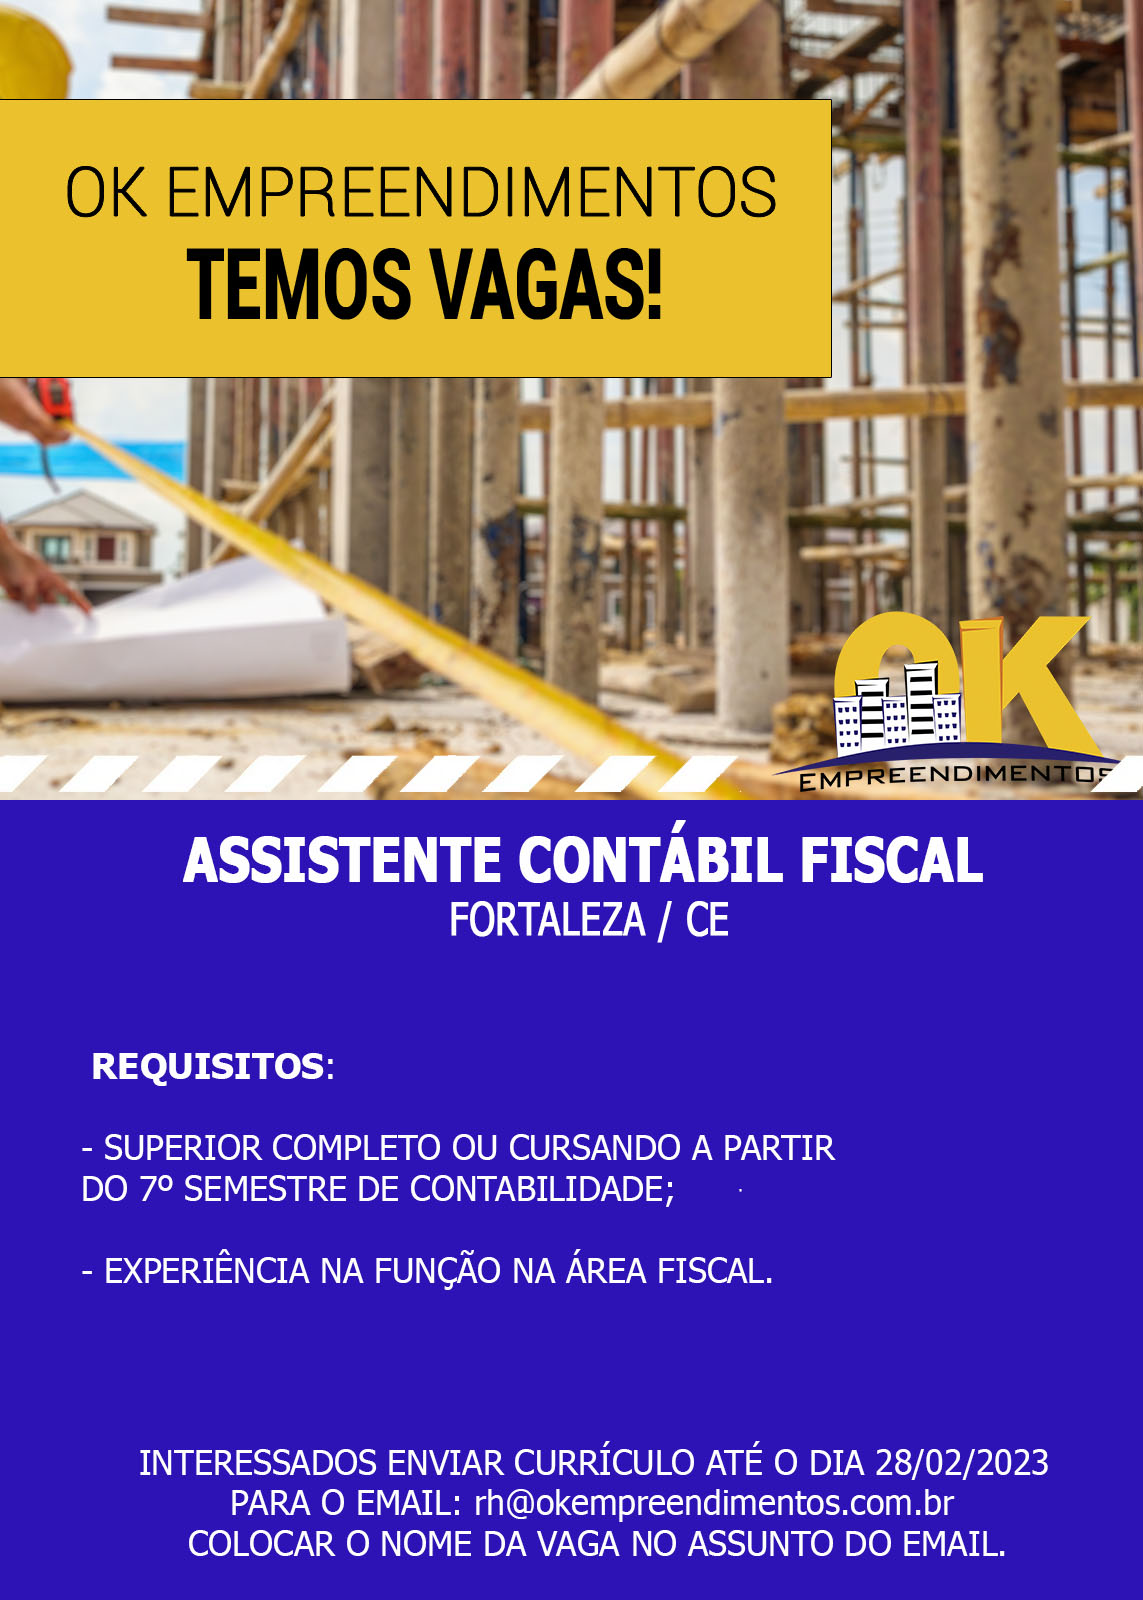 ASSISTENTE CONTÁBIL FISCAL - FORTALEZA/CE